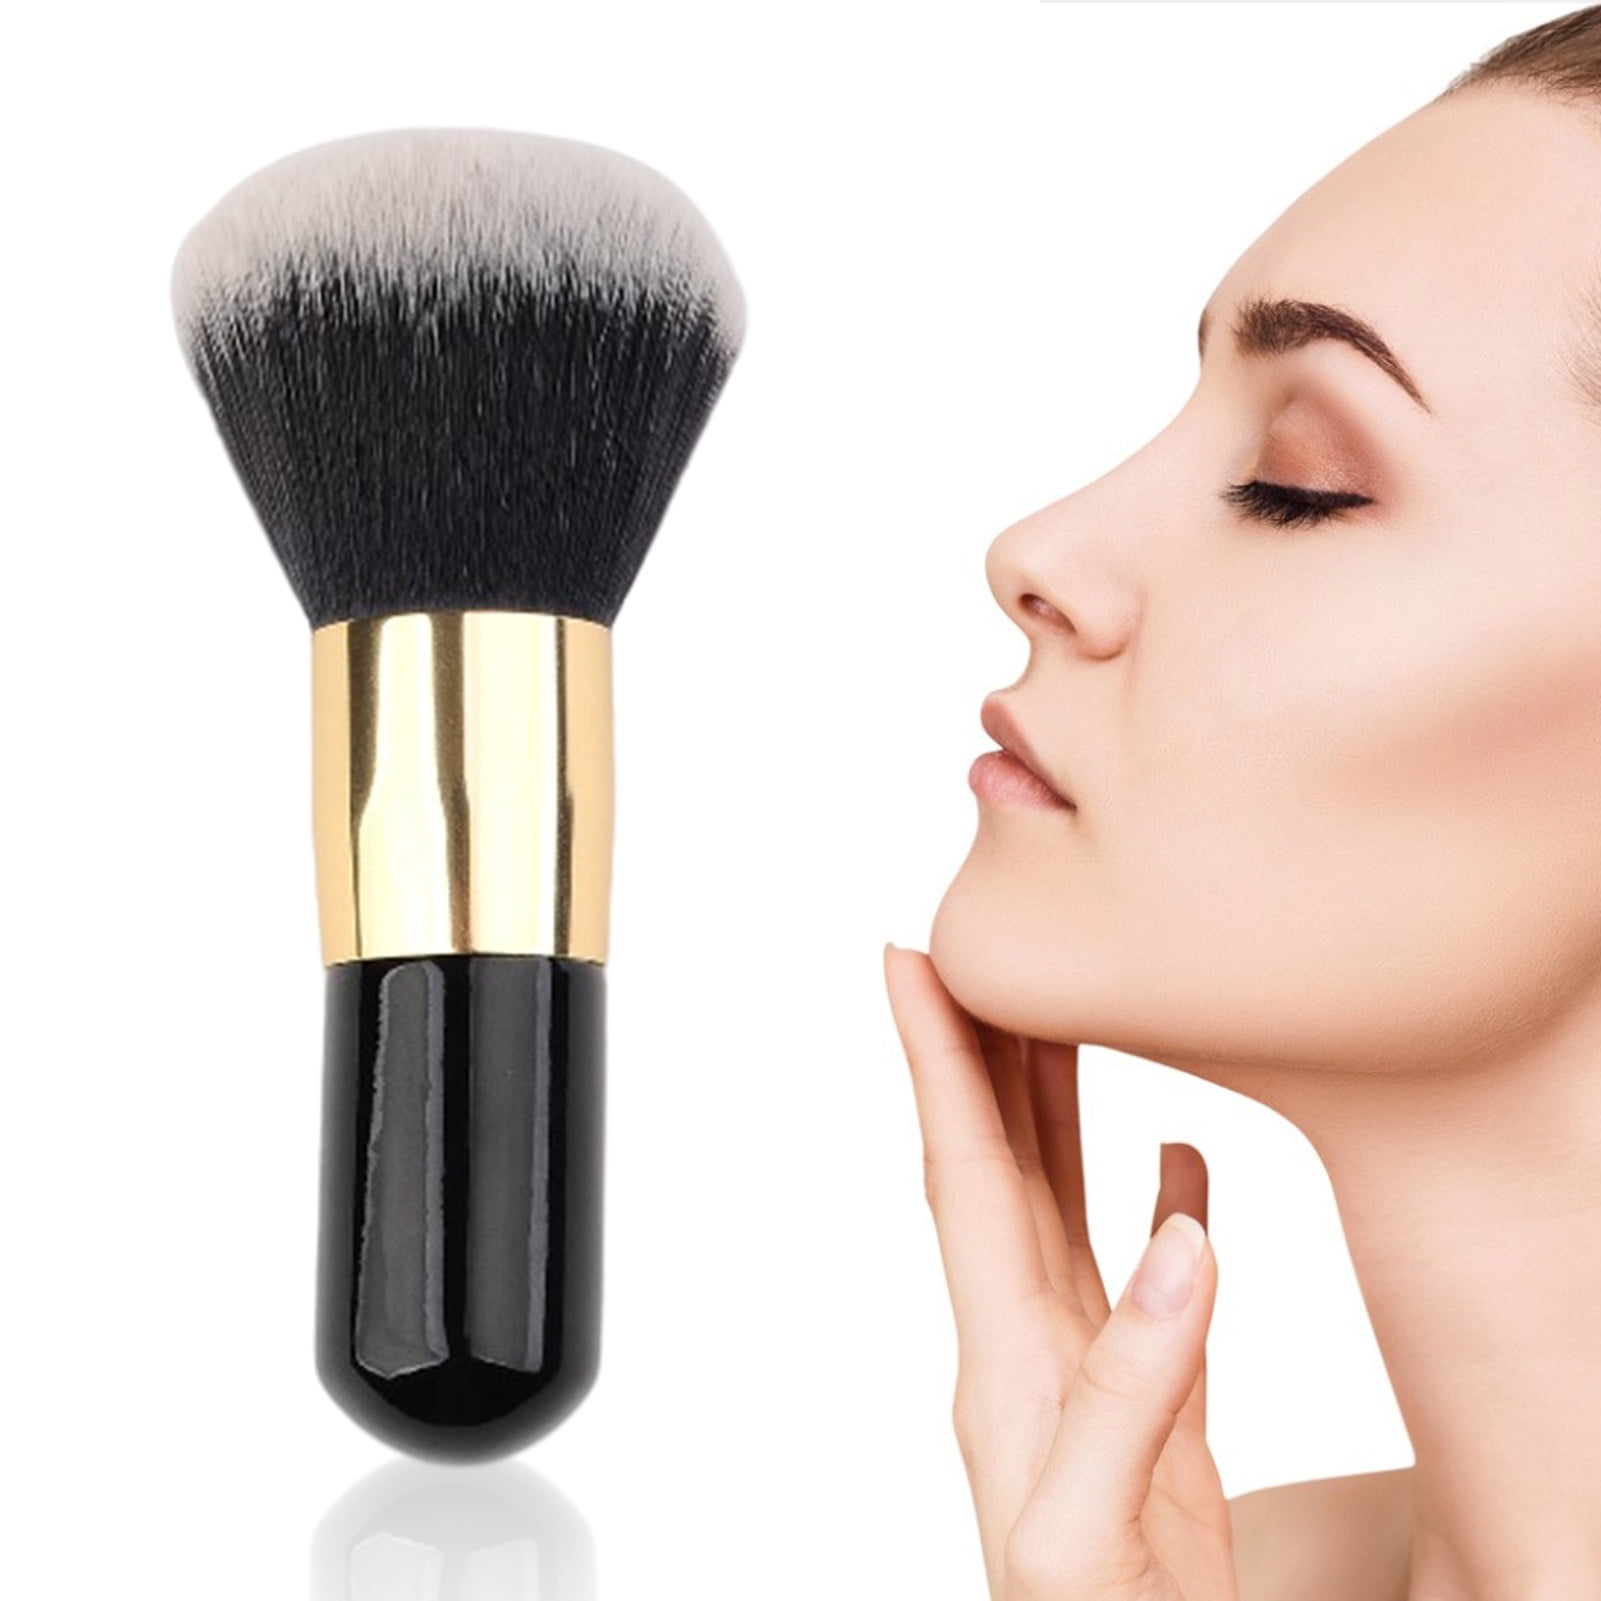  Makeup Eyeshadow Mini Makeup Beauty Foundation Makeup Brush Set  Makeup Beginner Soft Powder Synthetic Set Brush Portable Set Advanced Brush  Brush Makeup Mat for Vanity (C, One Size) : יופי וטיפוח